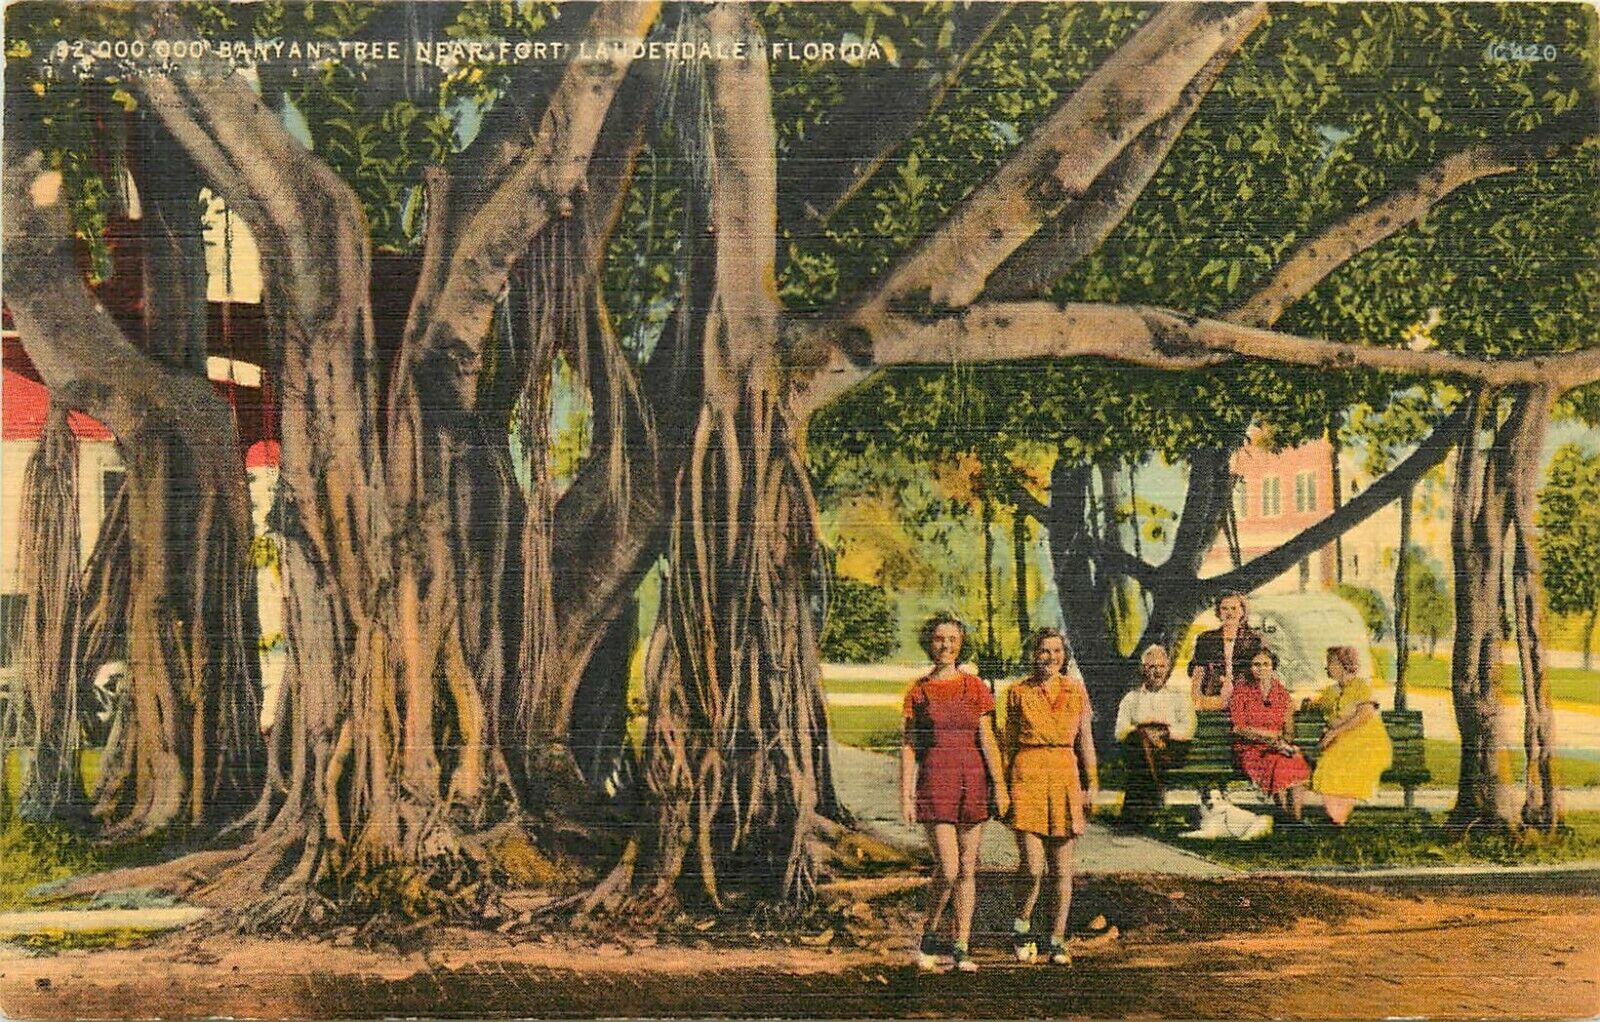 Banyan Tree Fort Lauderdale Florida FL Postcard